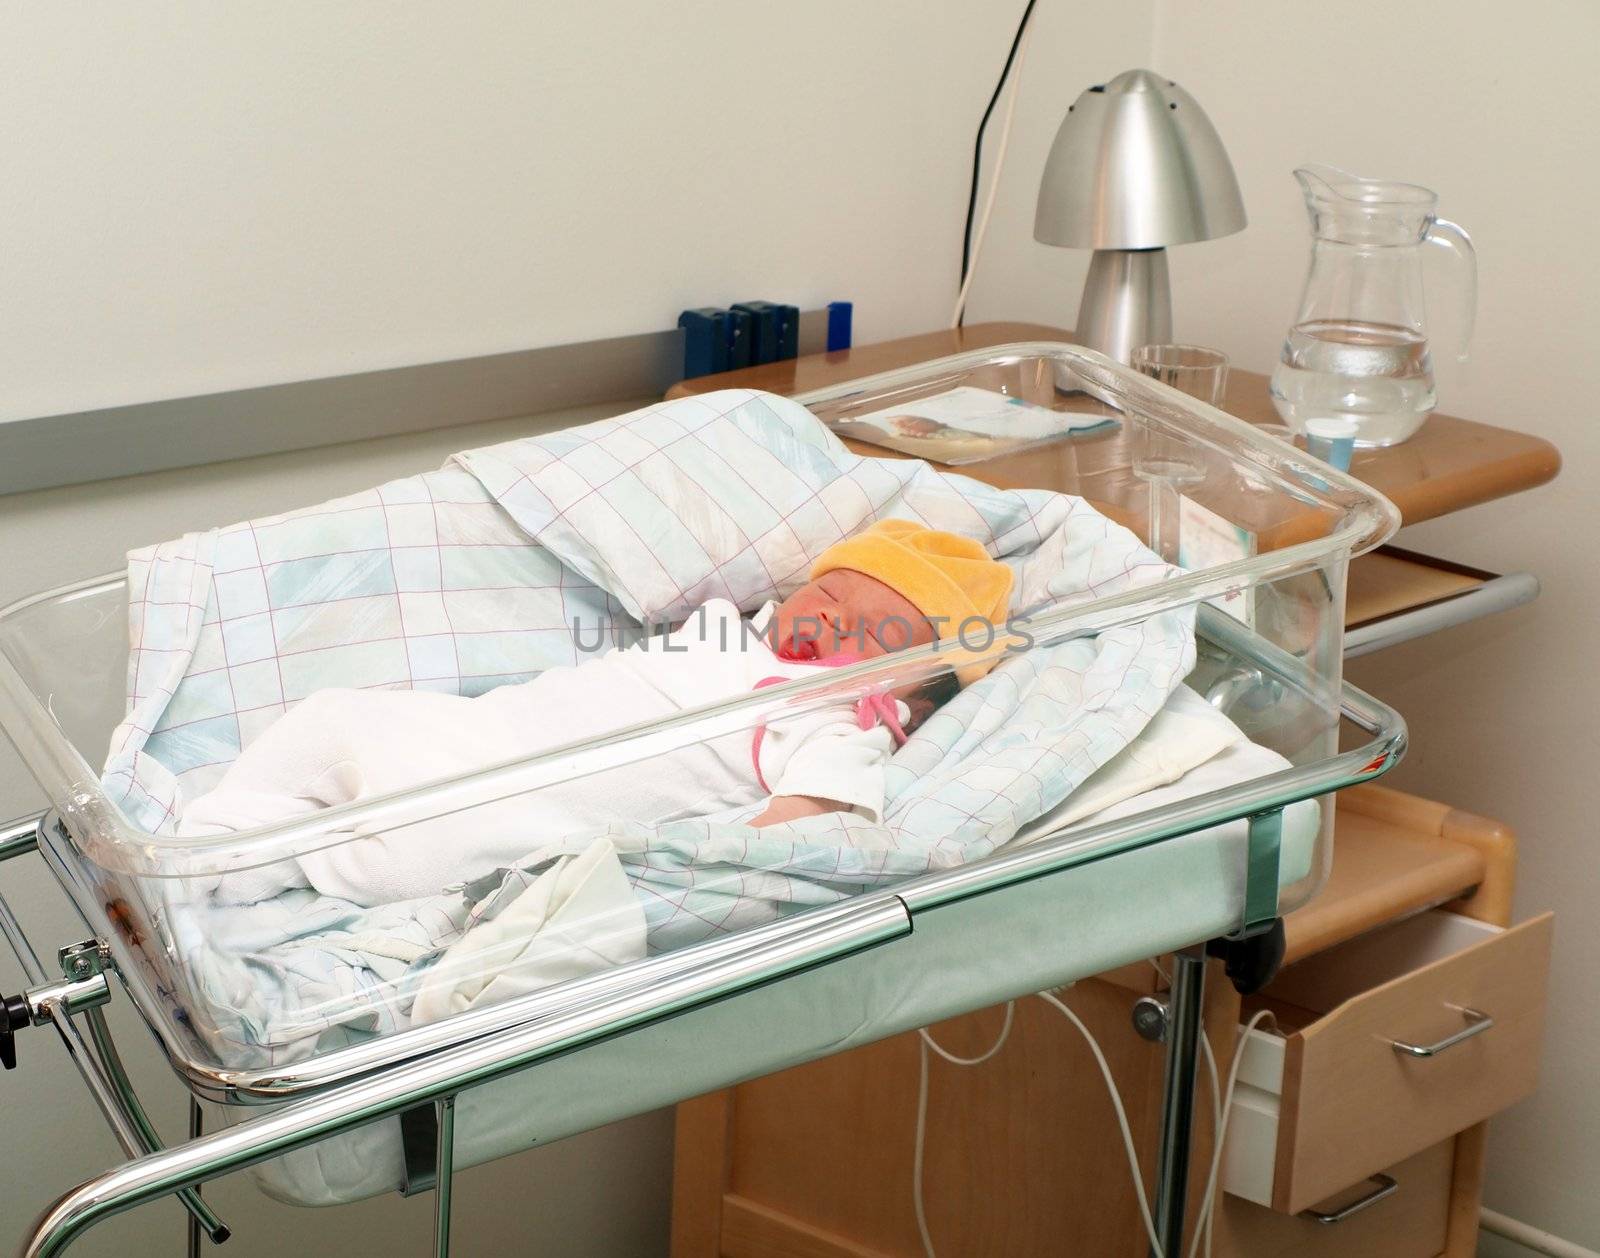 Newborn baby, first days, sleeping in the hospital